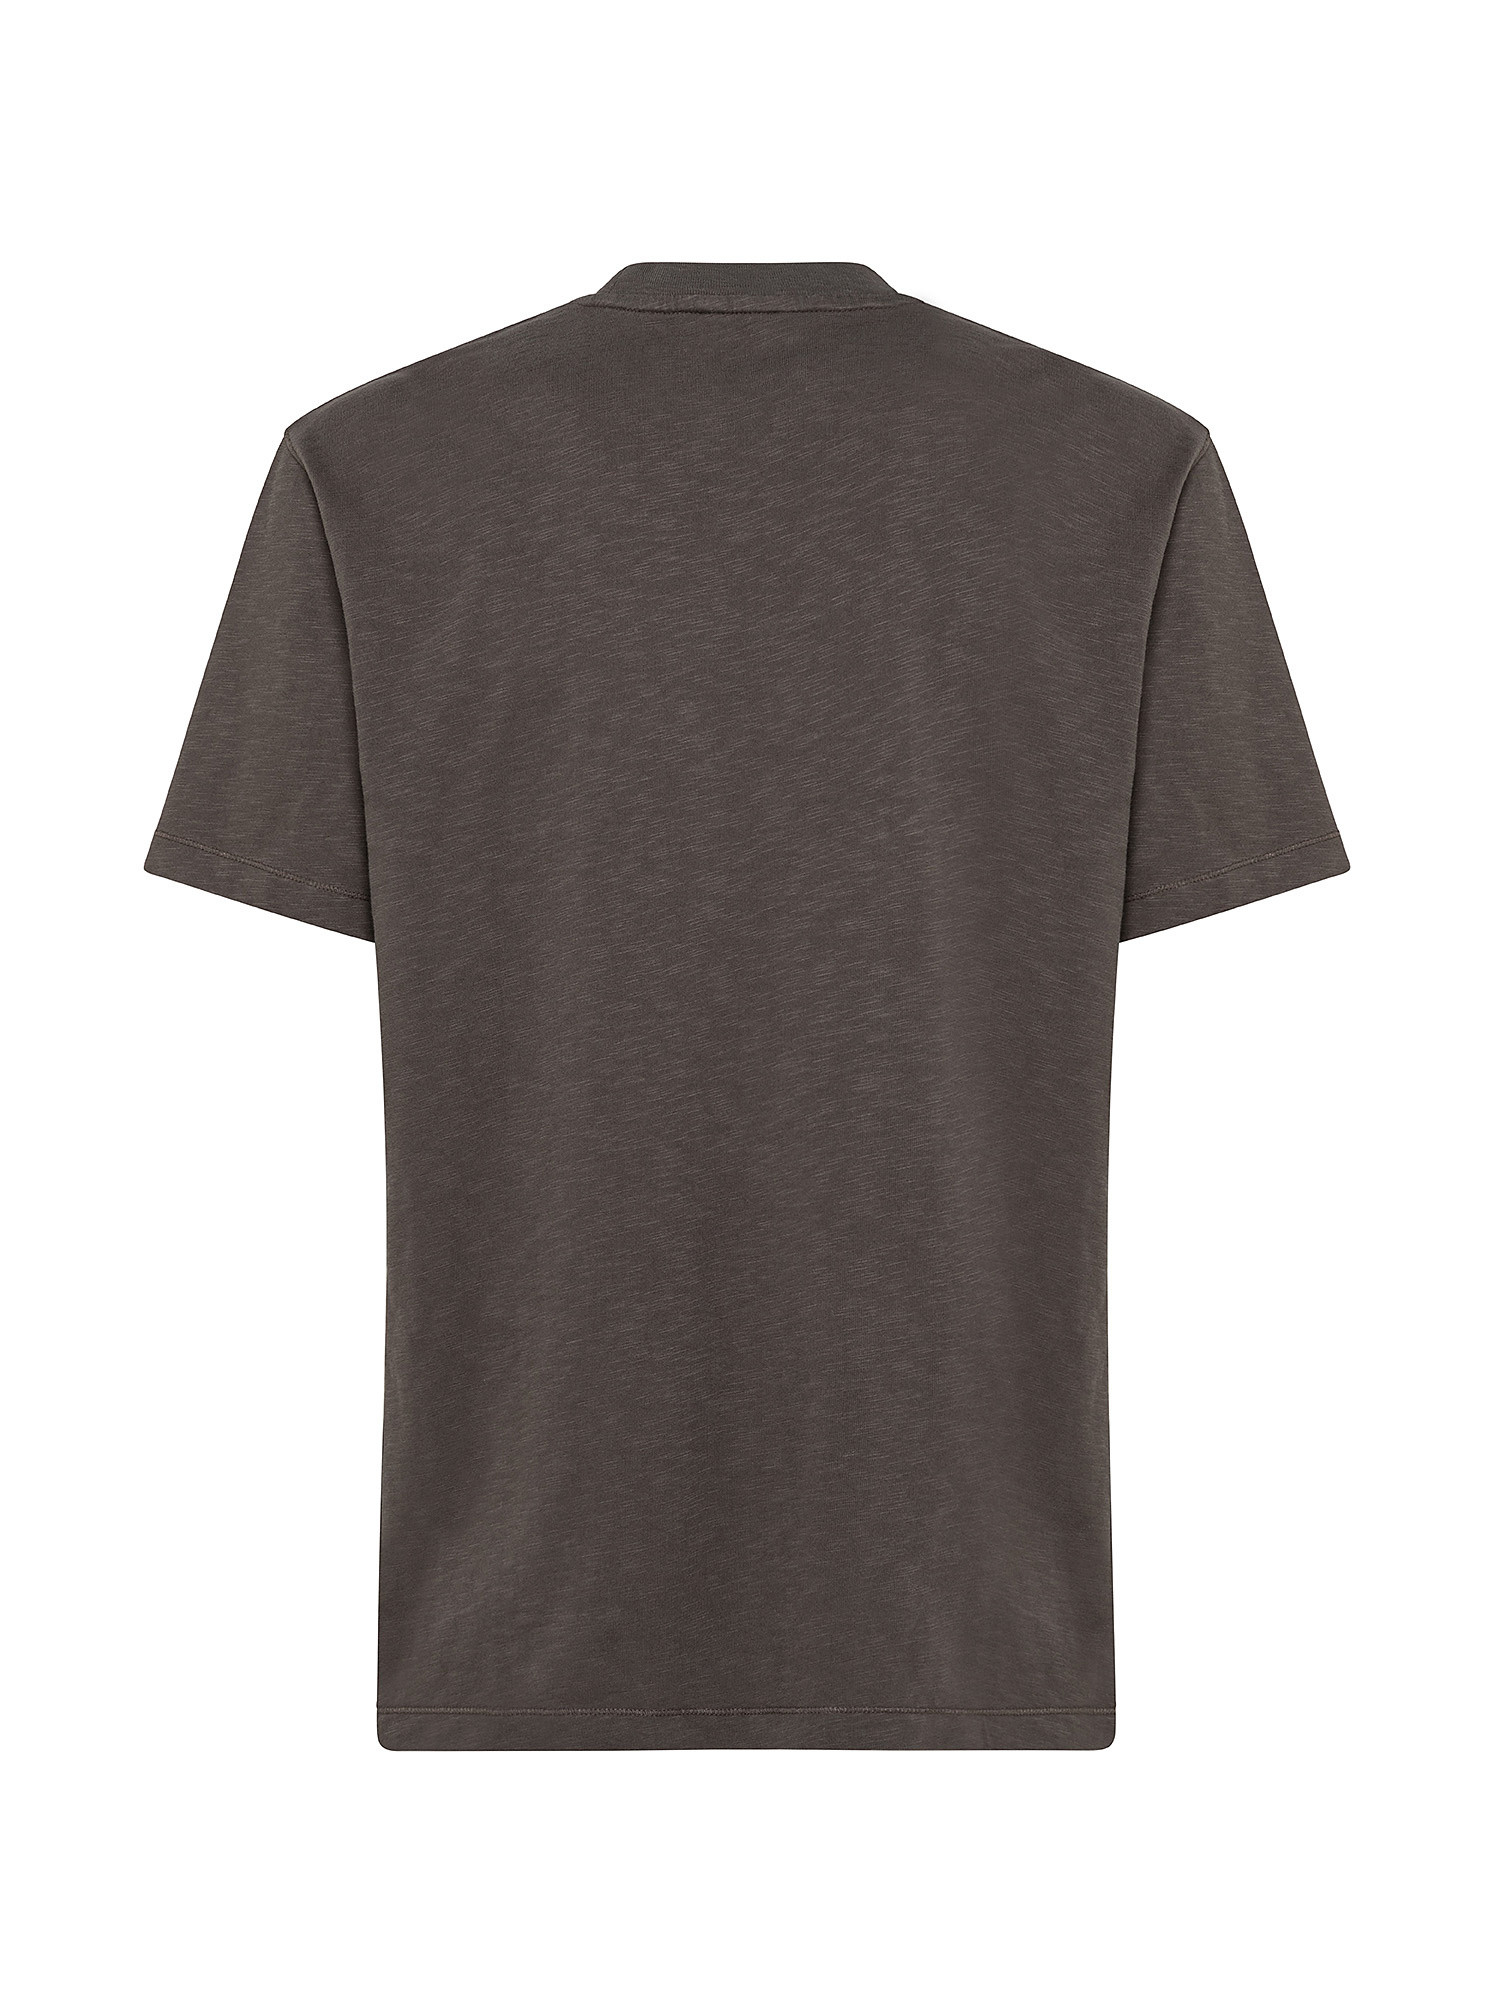 Soft T-Shirt, Grey, large image number 1